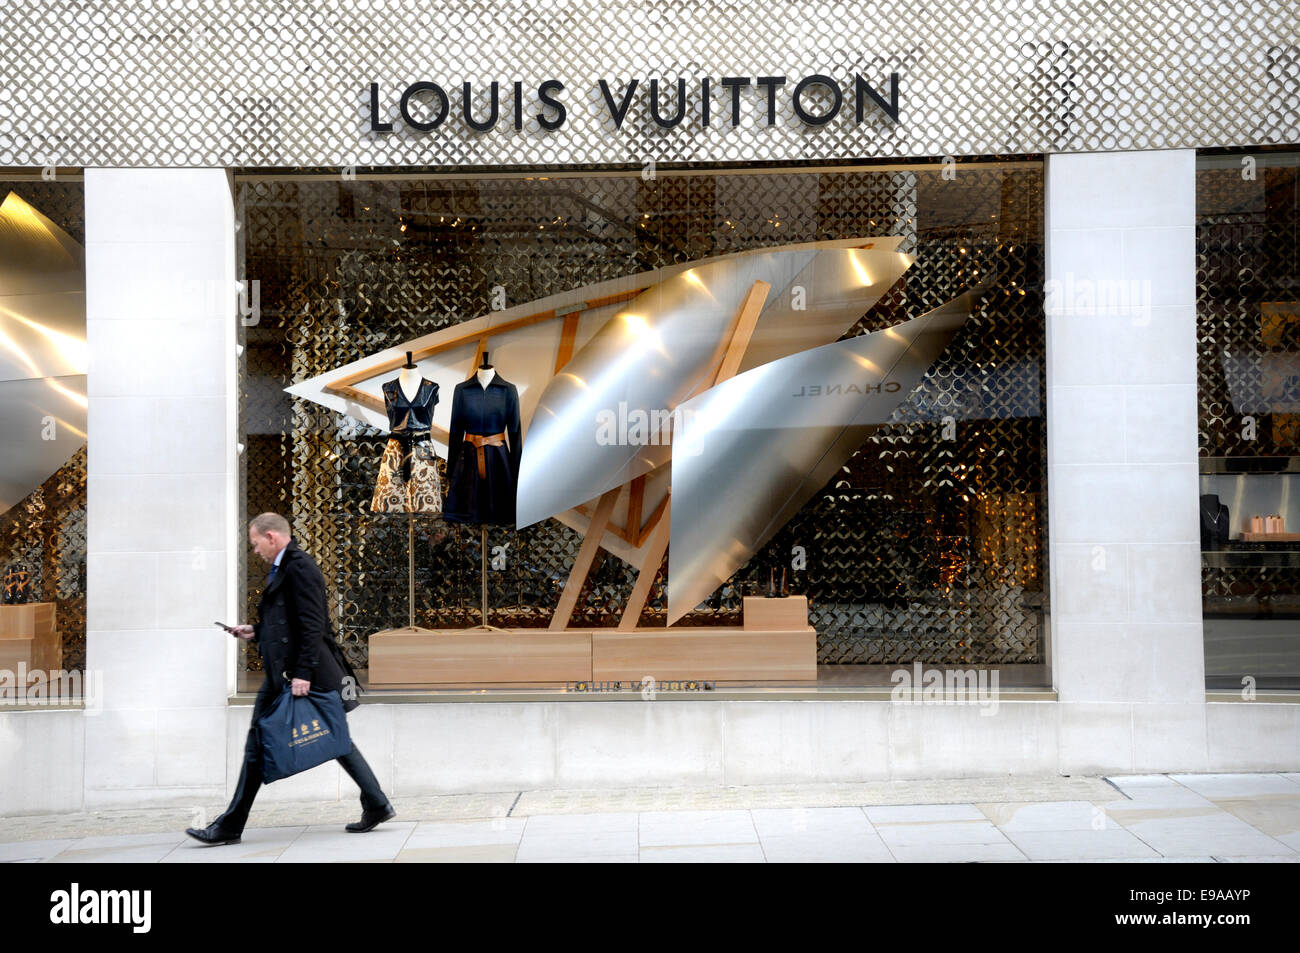 England, UK. Louis Vuitton shop in Street Stock Photo -